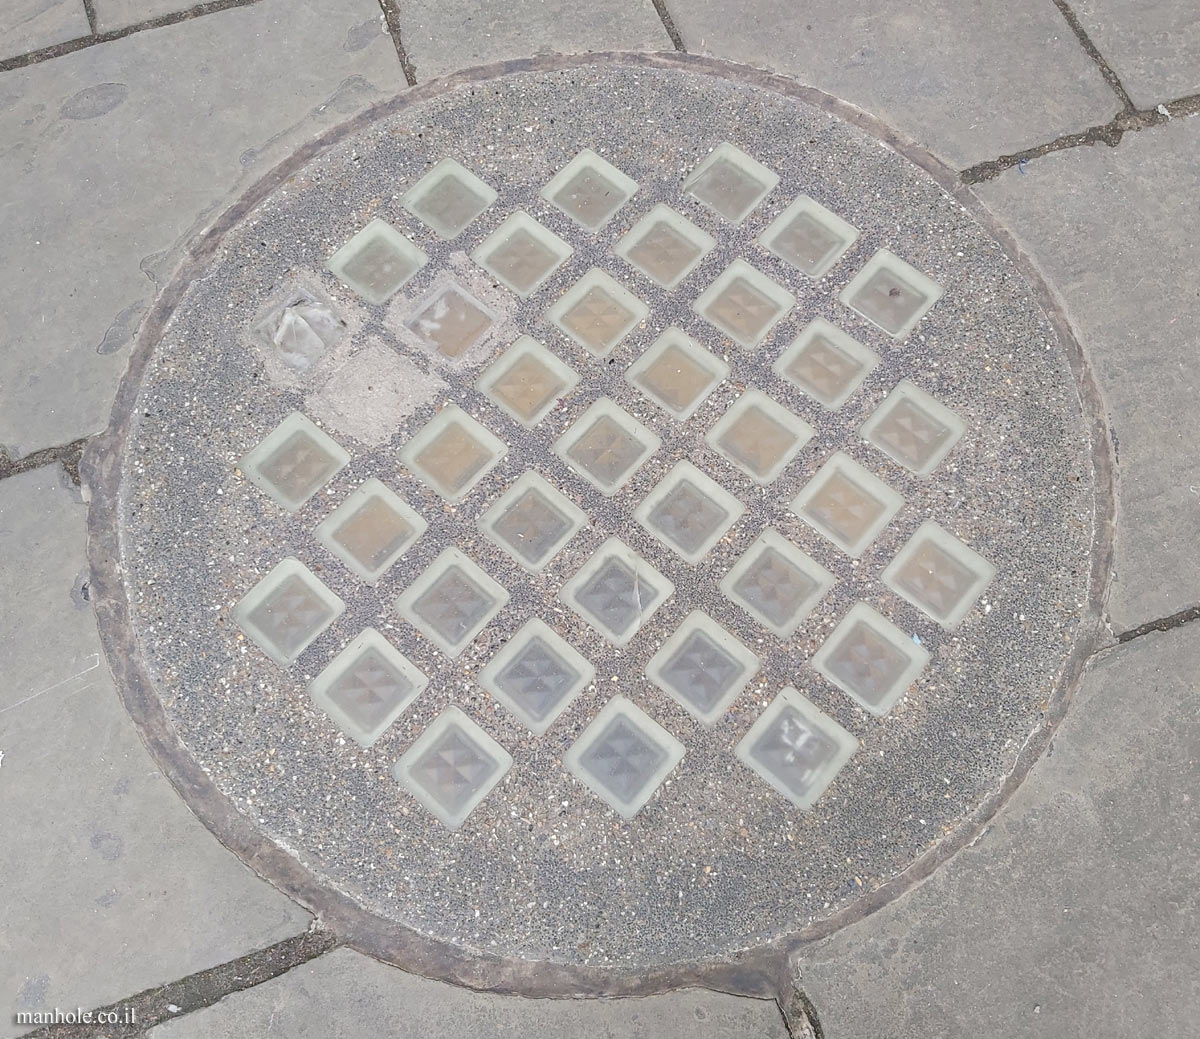 Oxford - Round concrete lid with transparent squares